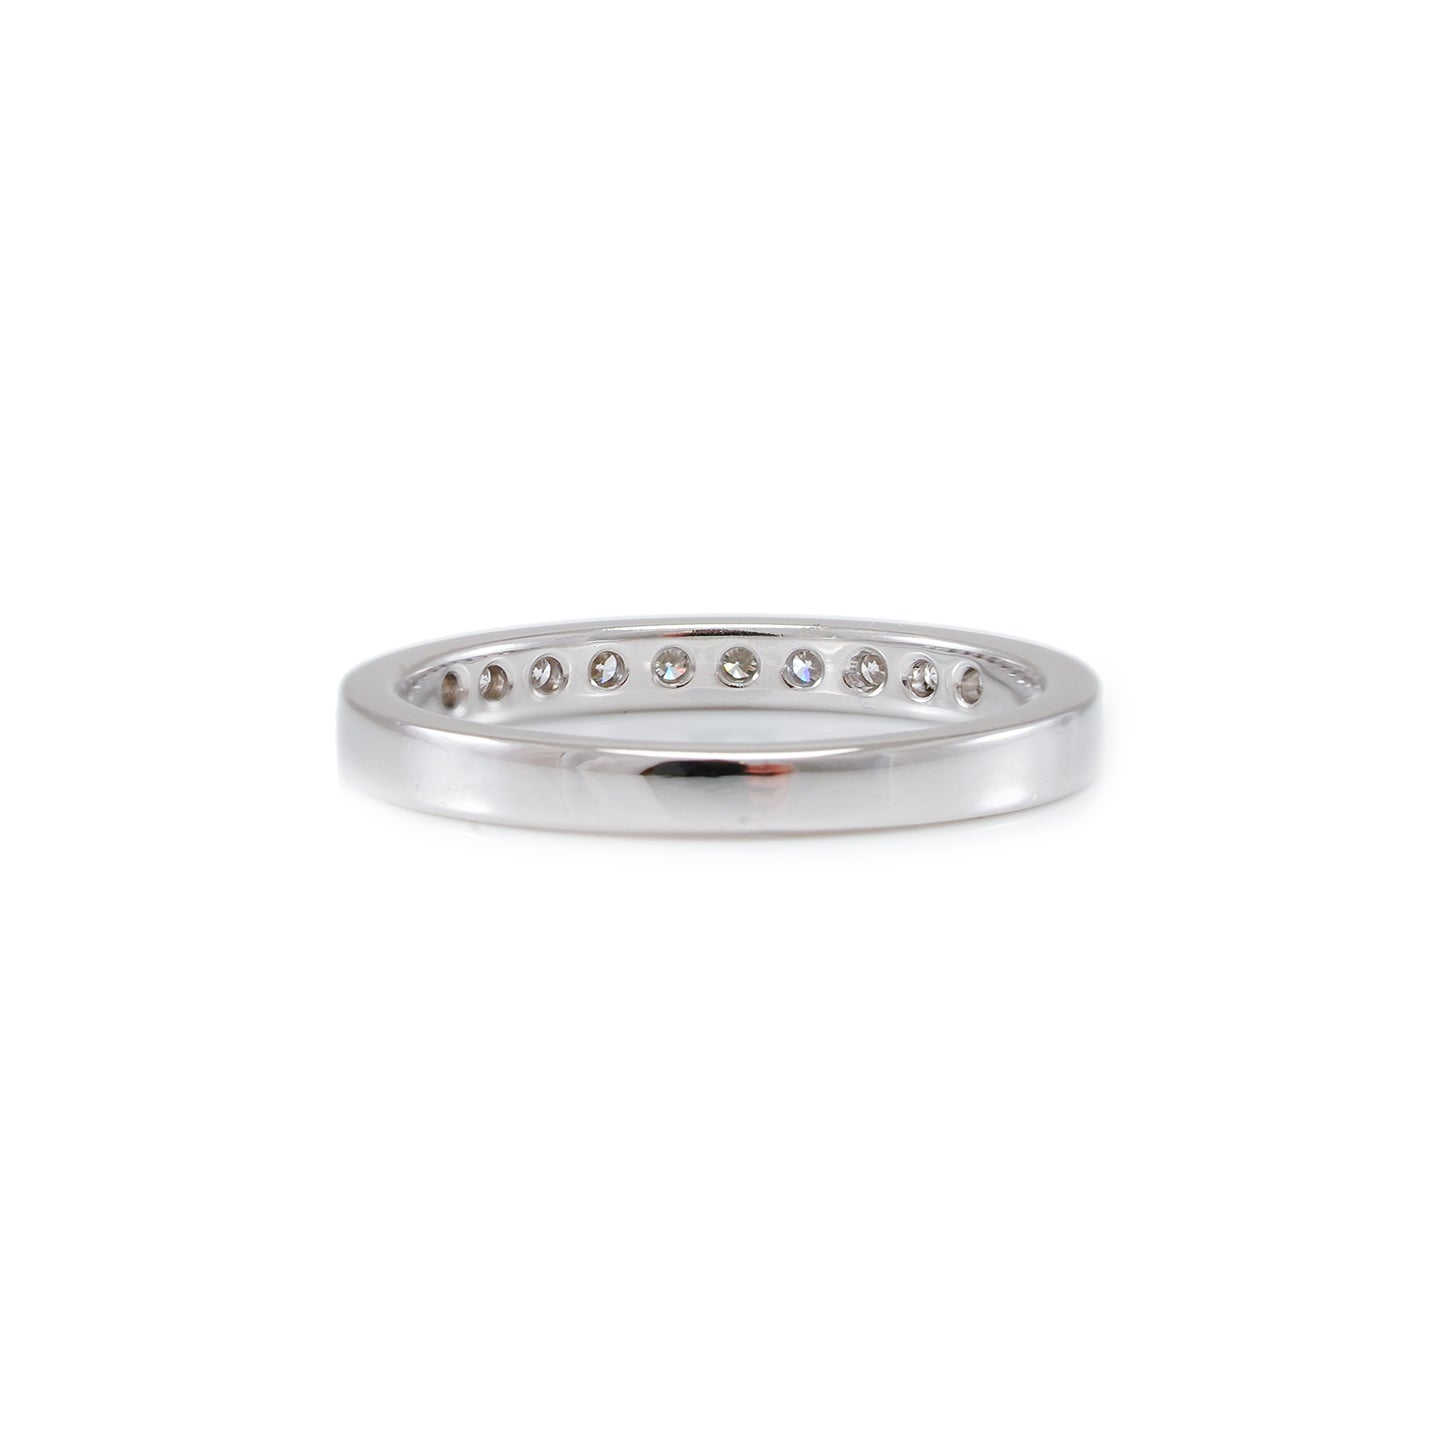 Memory diamond ring white gold 14K women's ring gold ring wedding ring women's jewelry